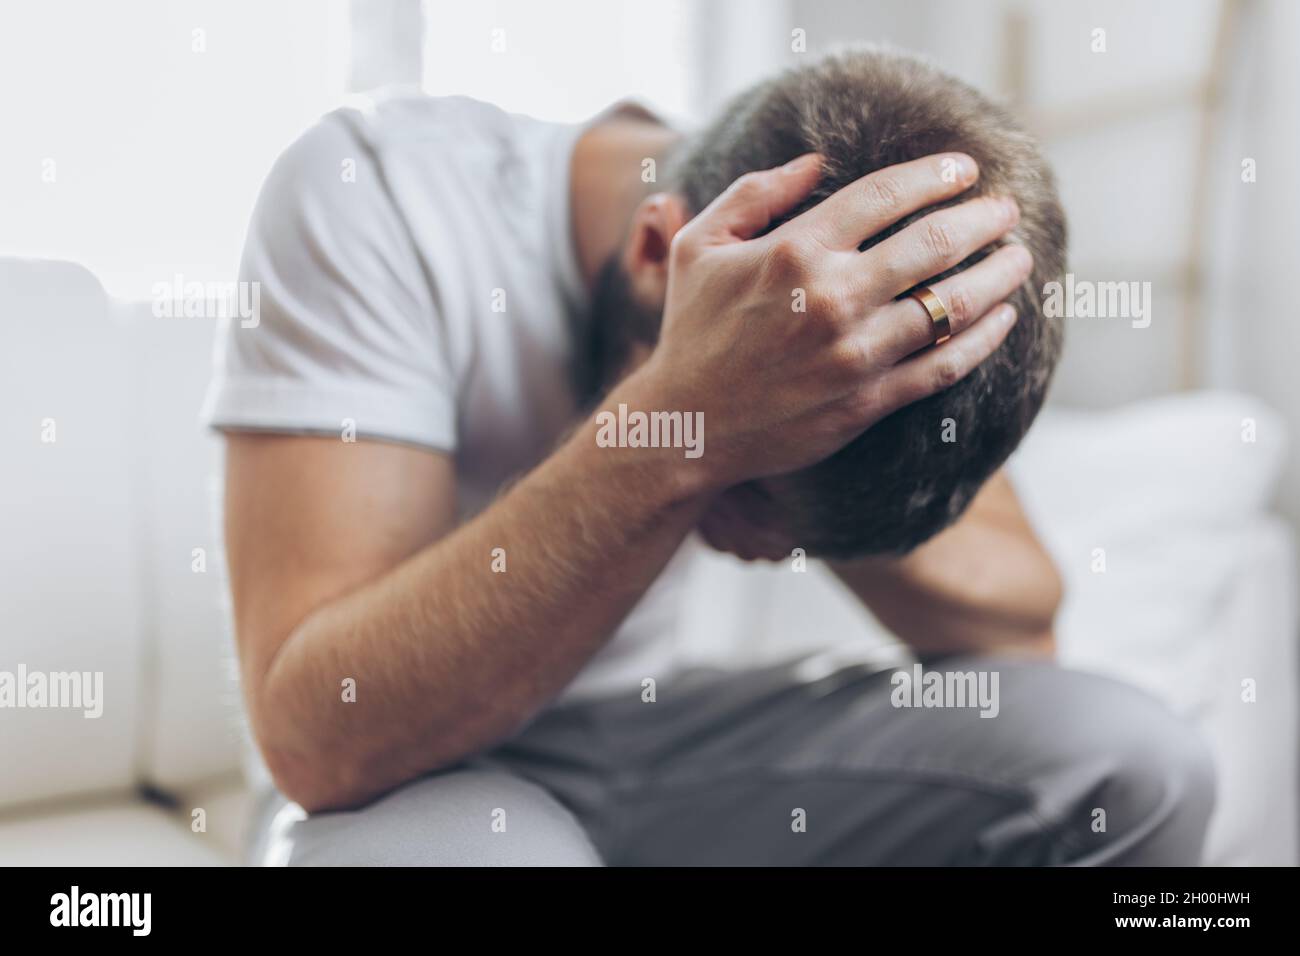 Heartbroken man at home holding a wedding ring Stock Photo